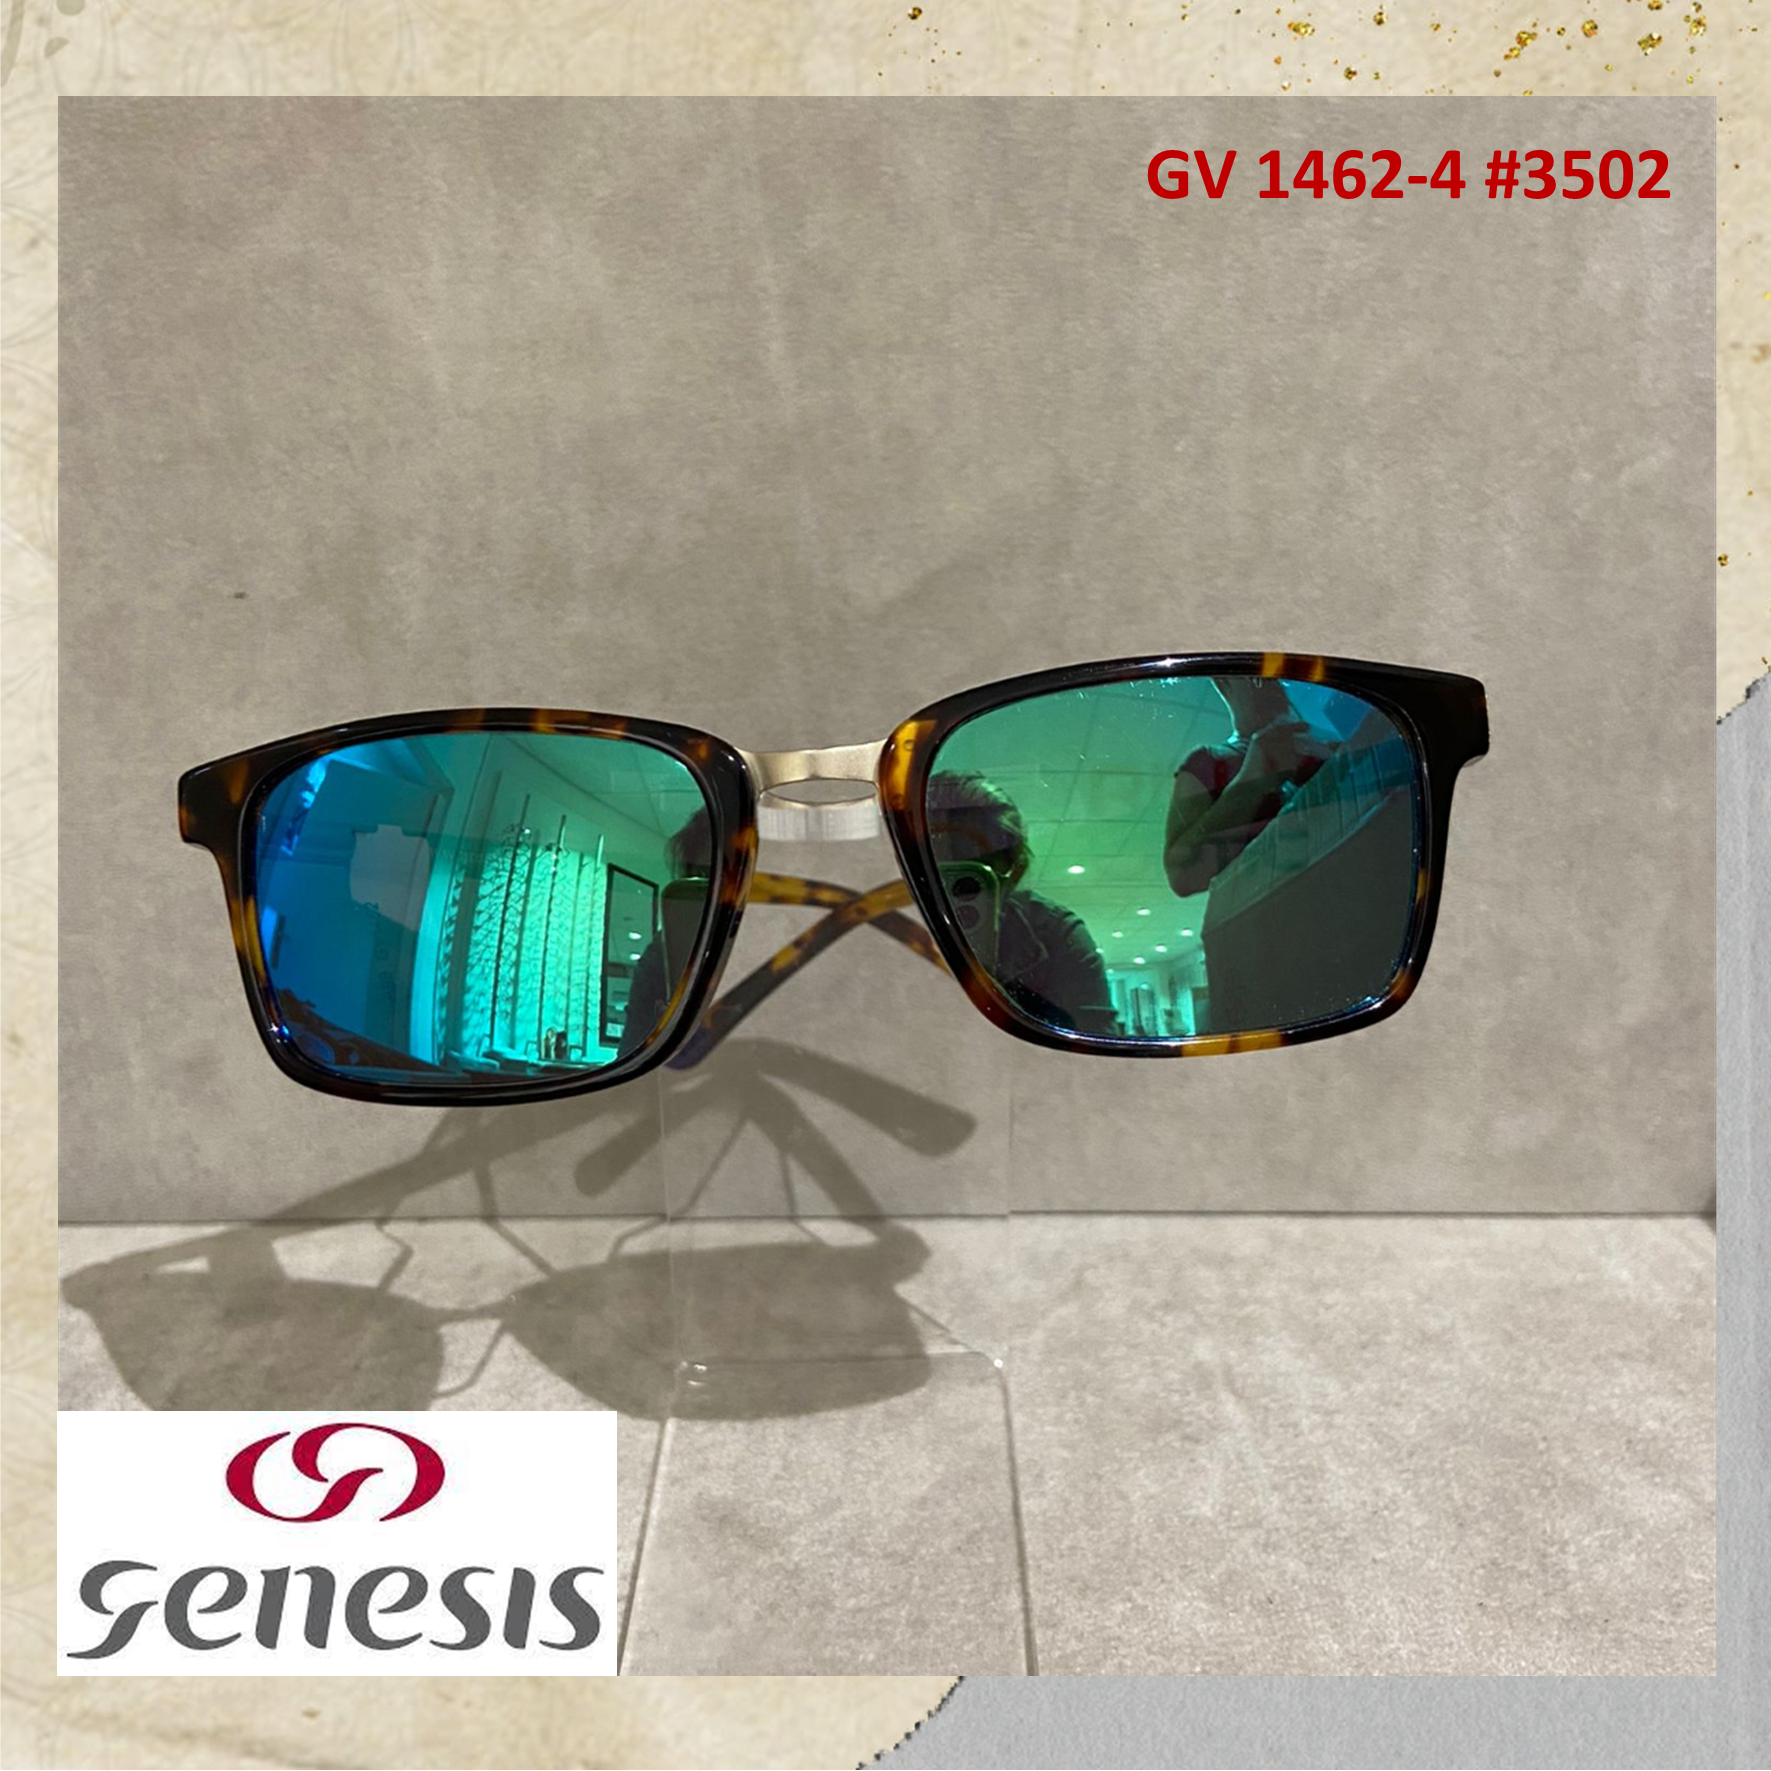 Genesis Eyewear Sonnenbrillen Sale